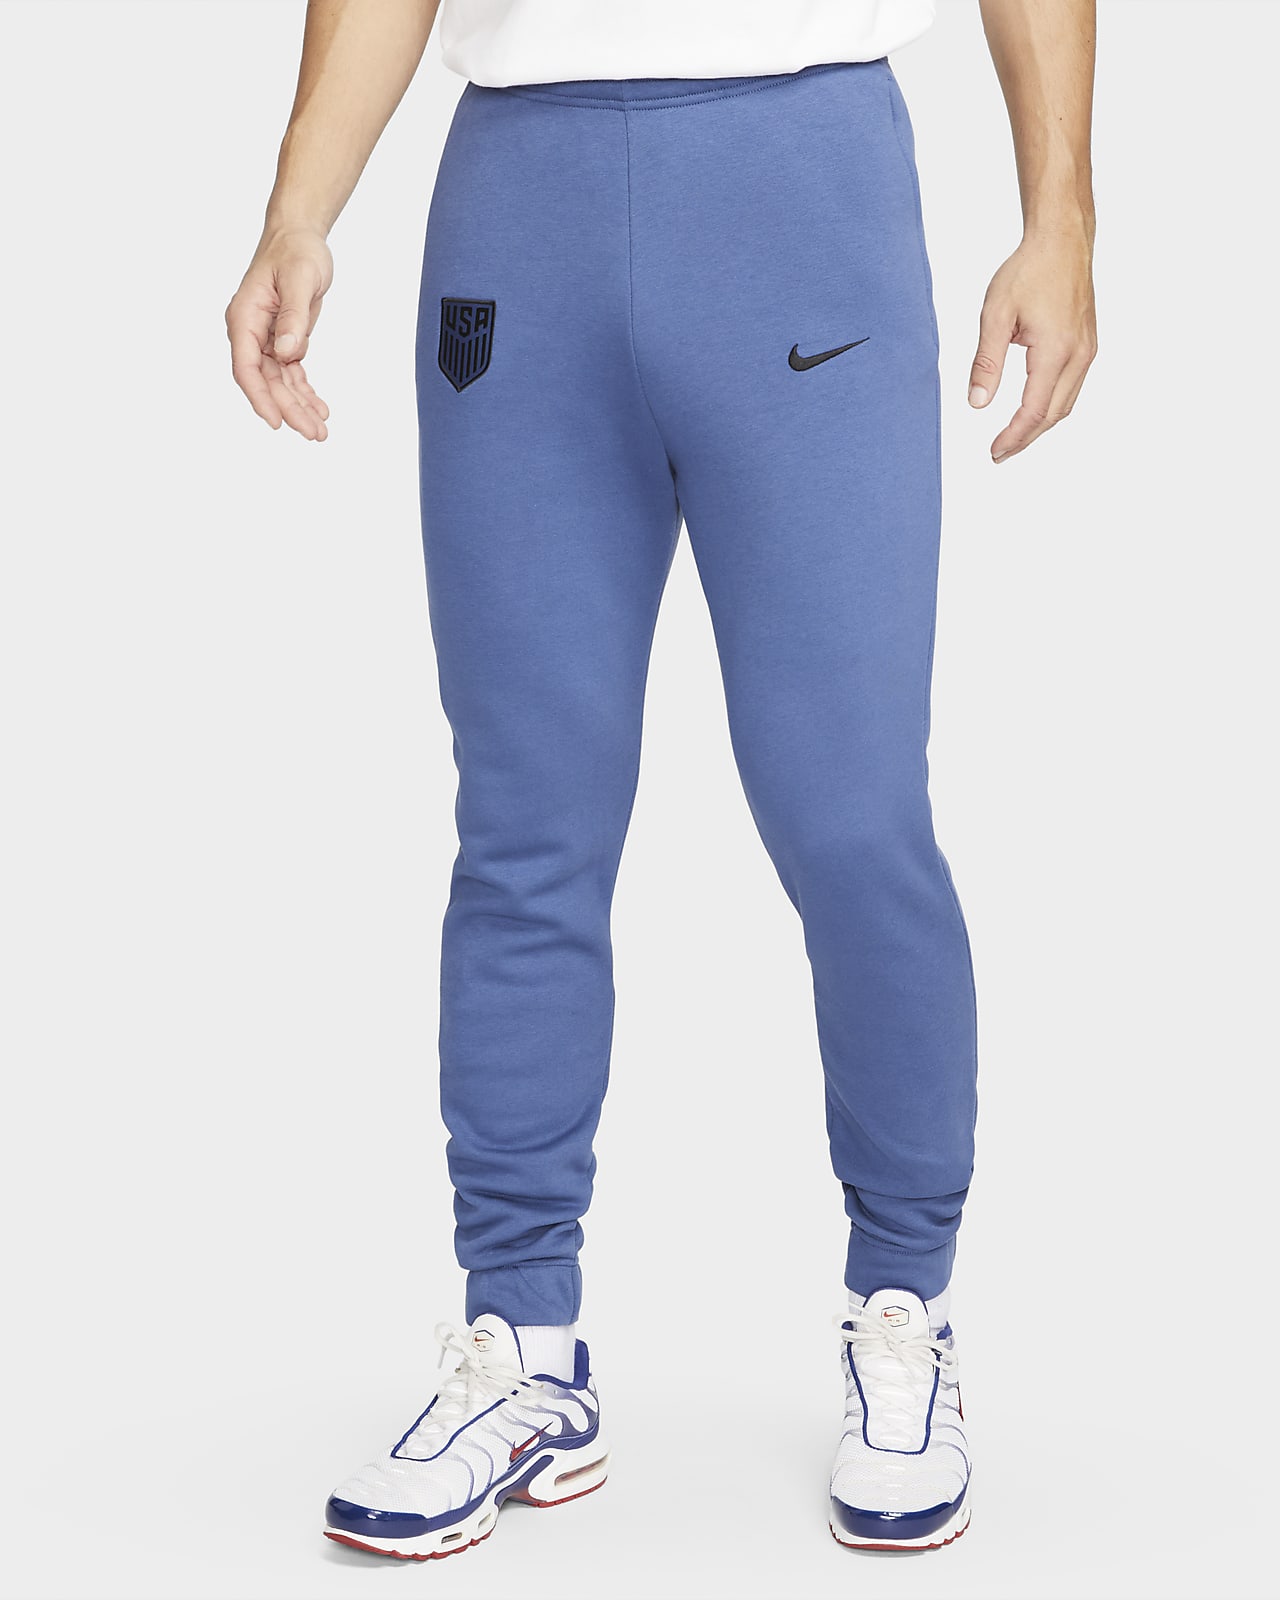 U.S. Men's Nike Fleece Soccer Pants